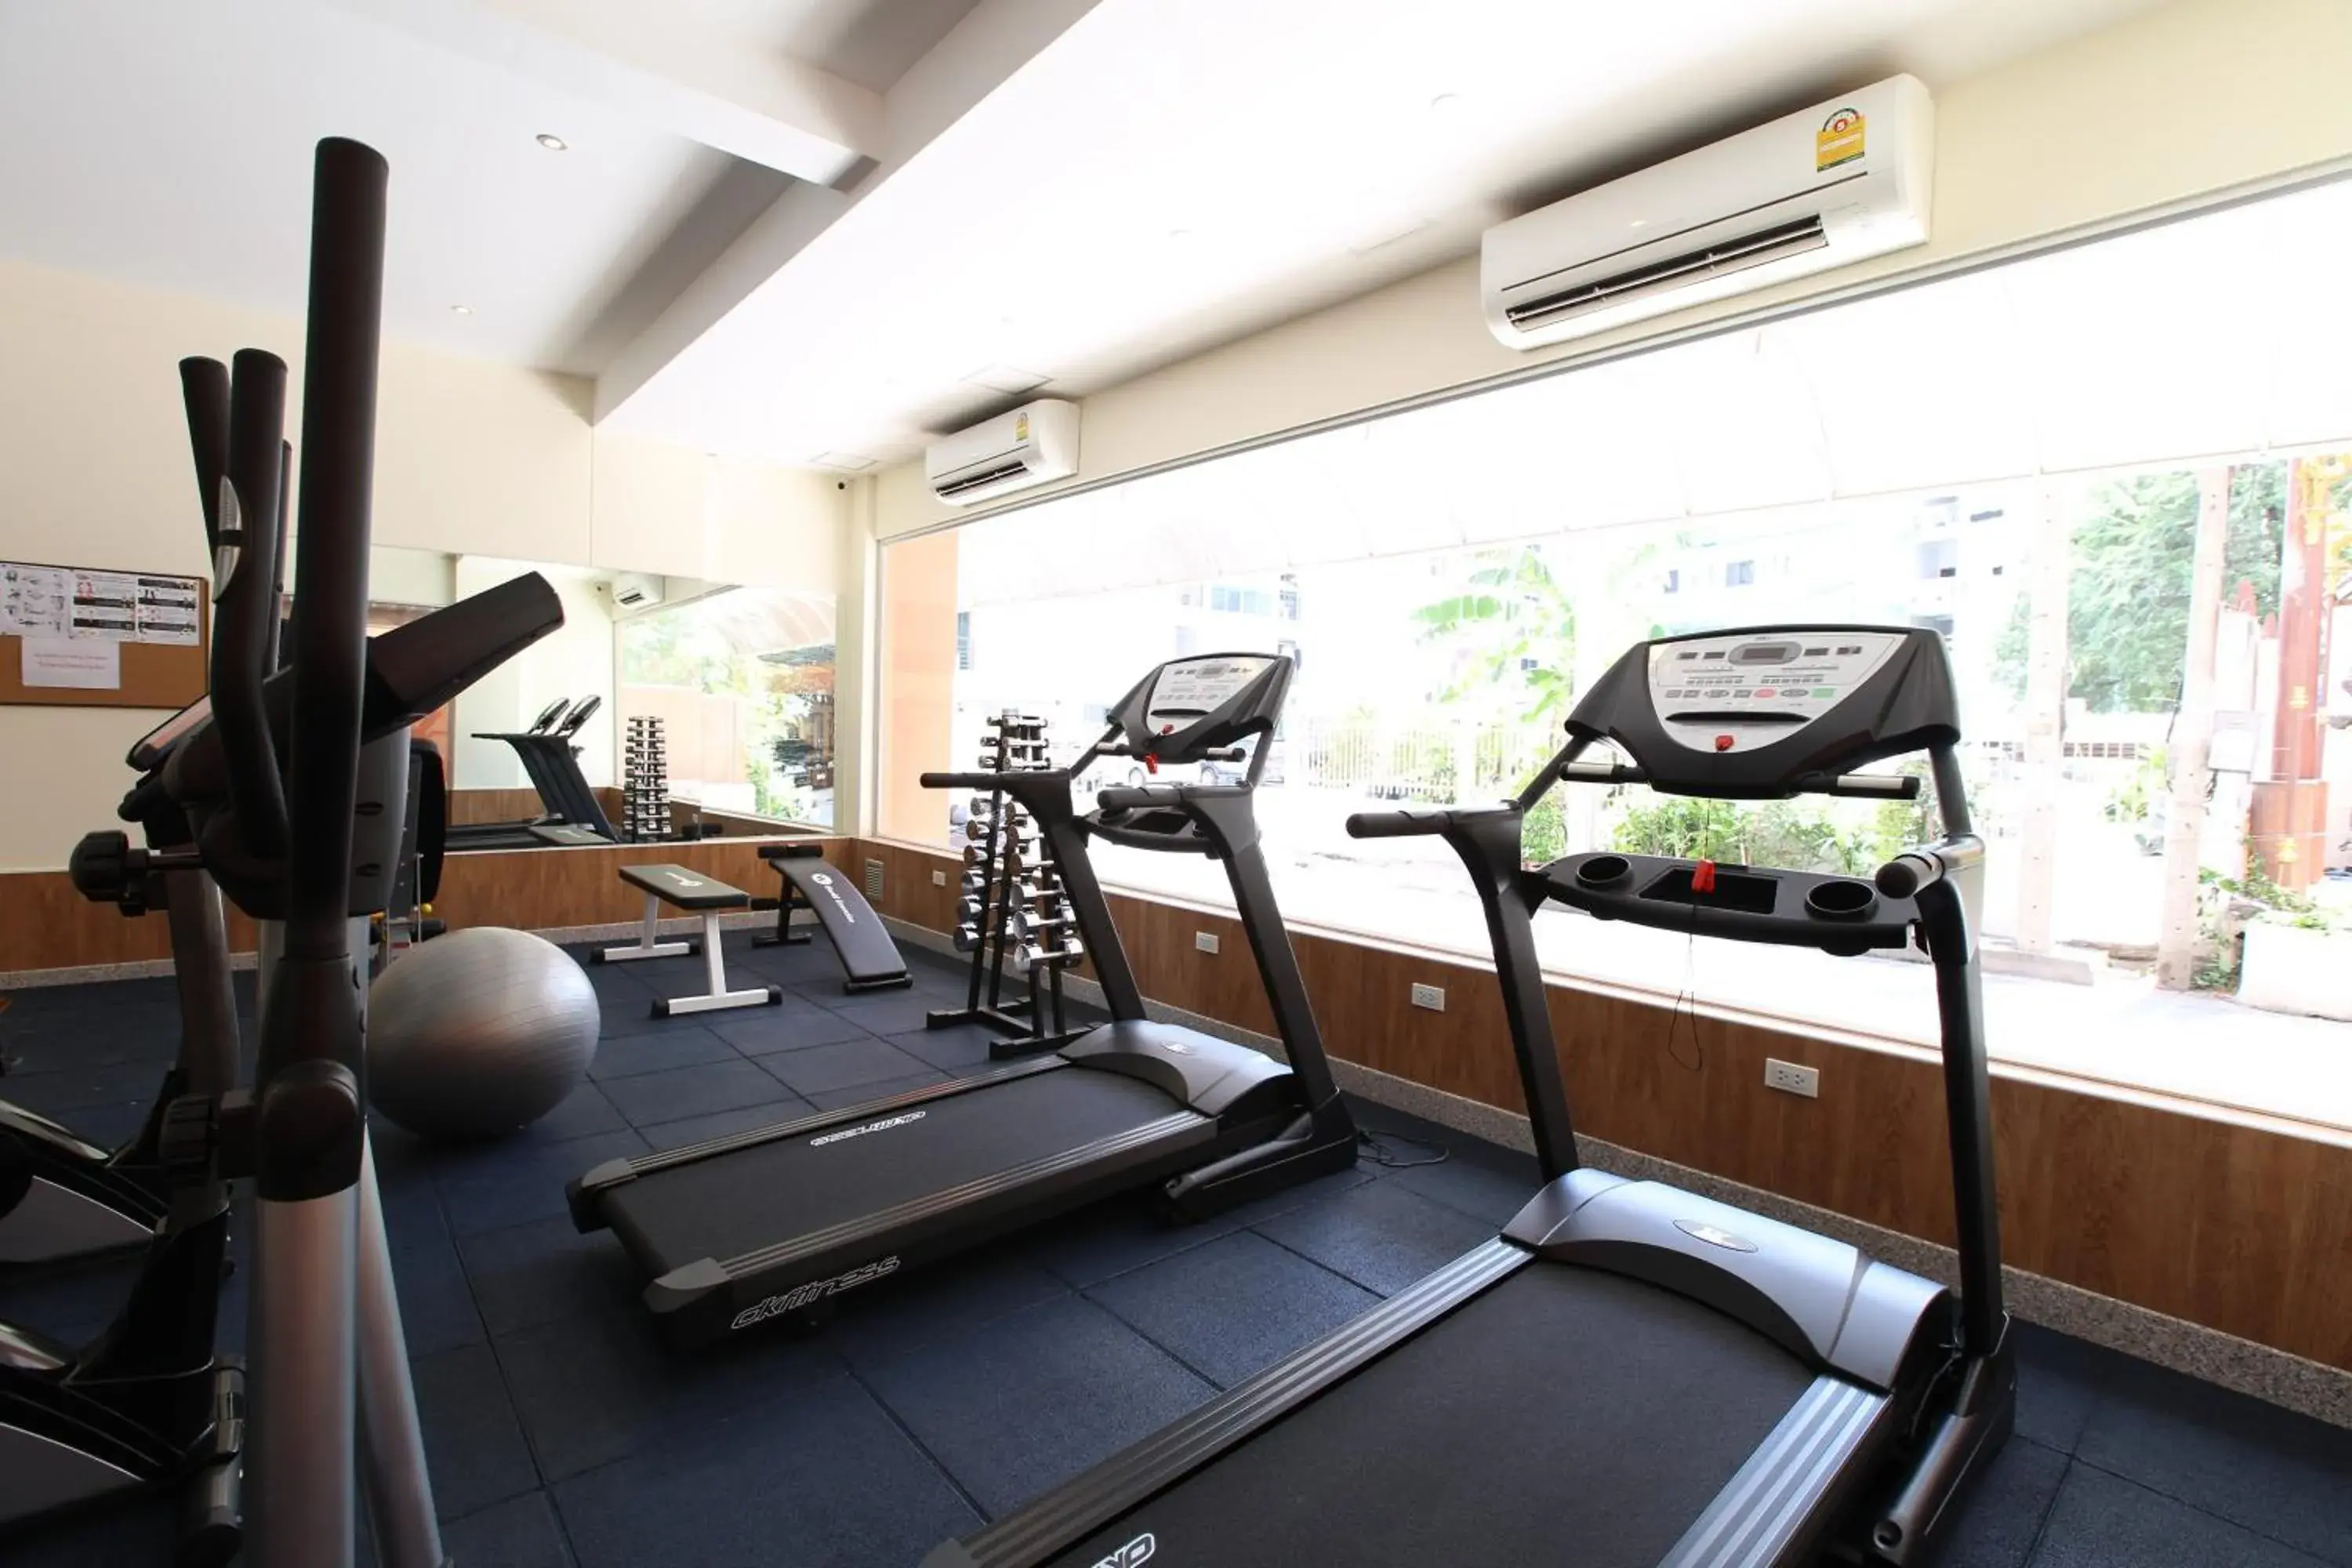 Fitness centre/facilities, Fitness Center/Facilities in KC Place Srinakarin